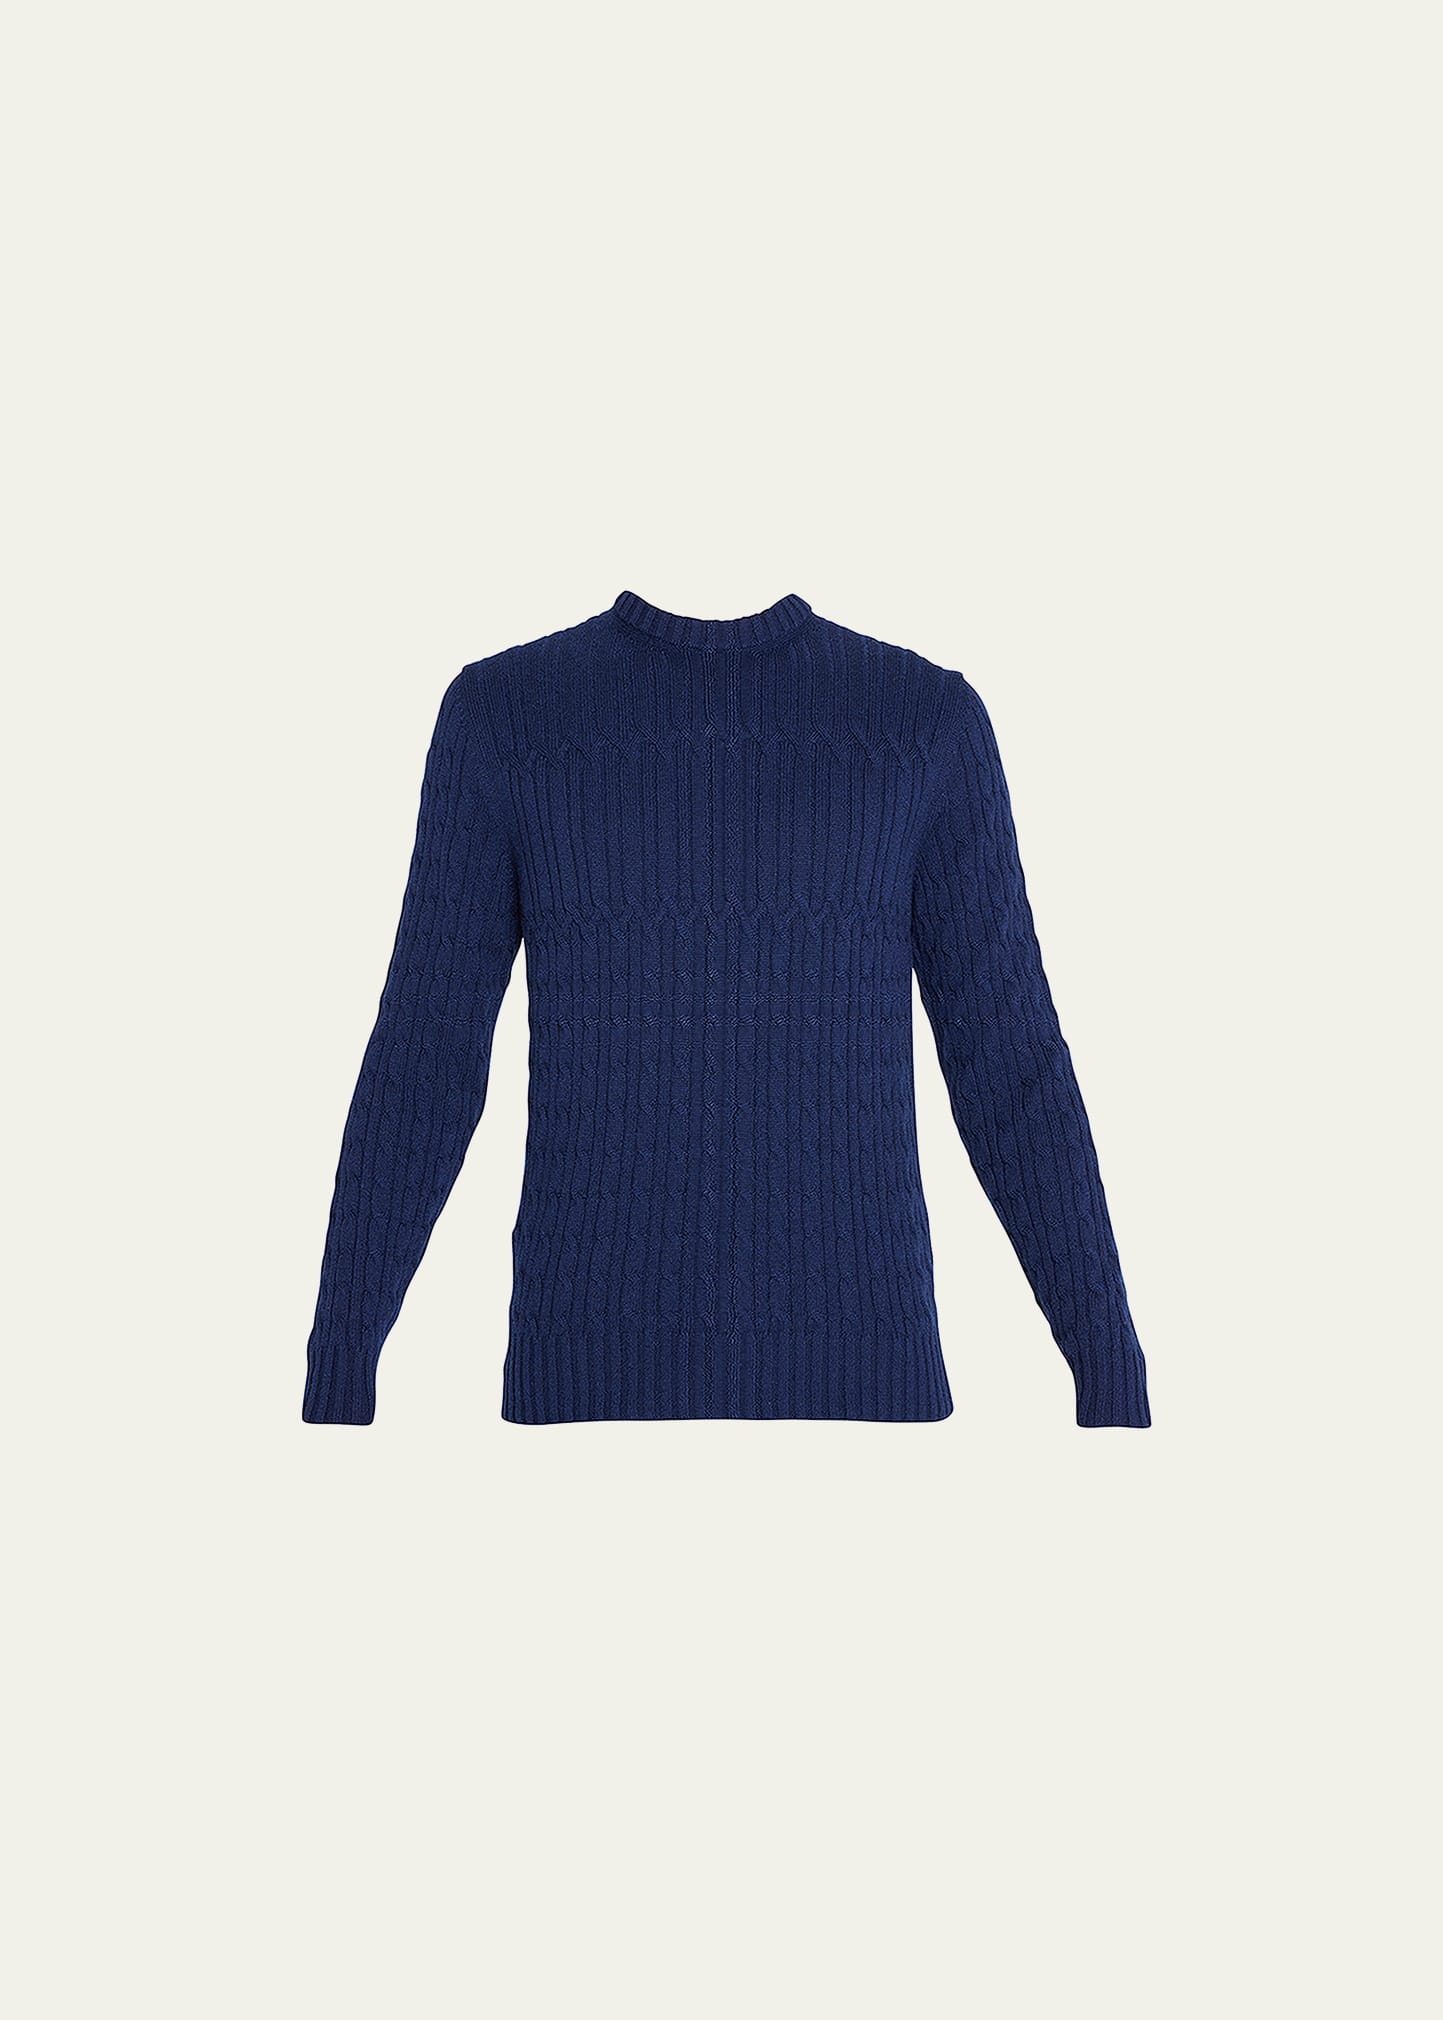 Fioroni Men's Cashmere Cable-Knit Crewneck Sweater